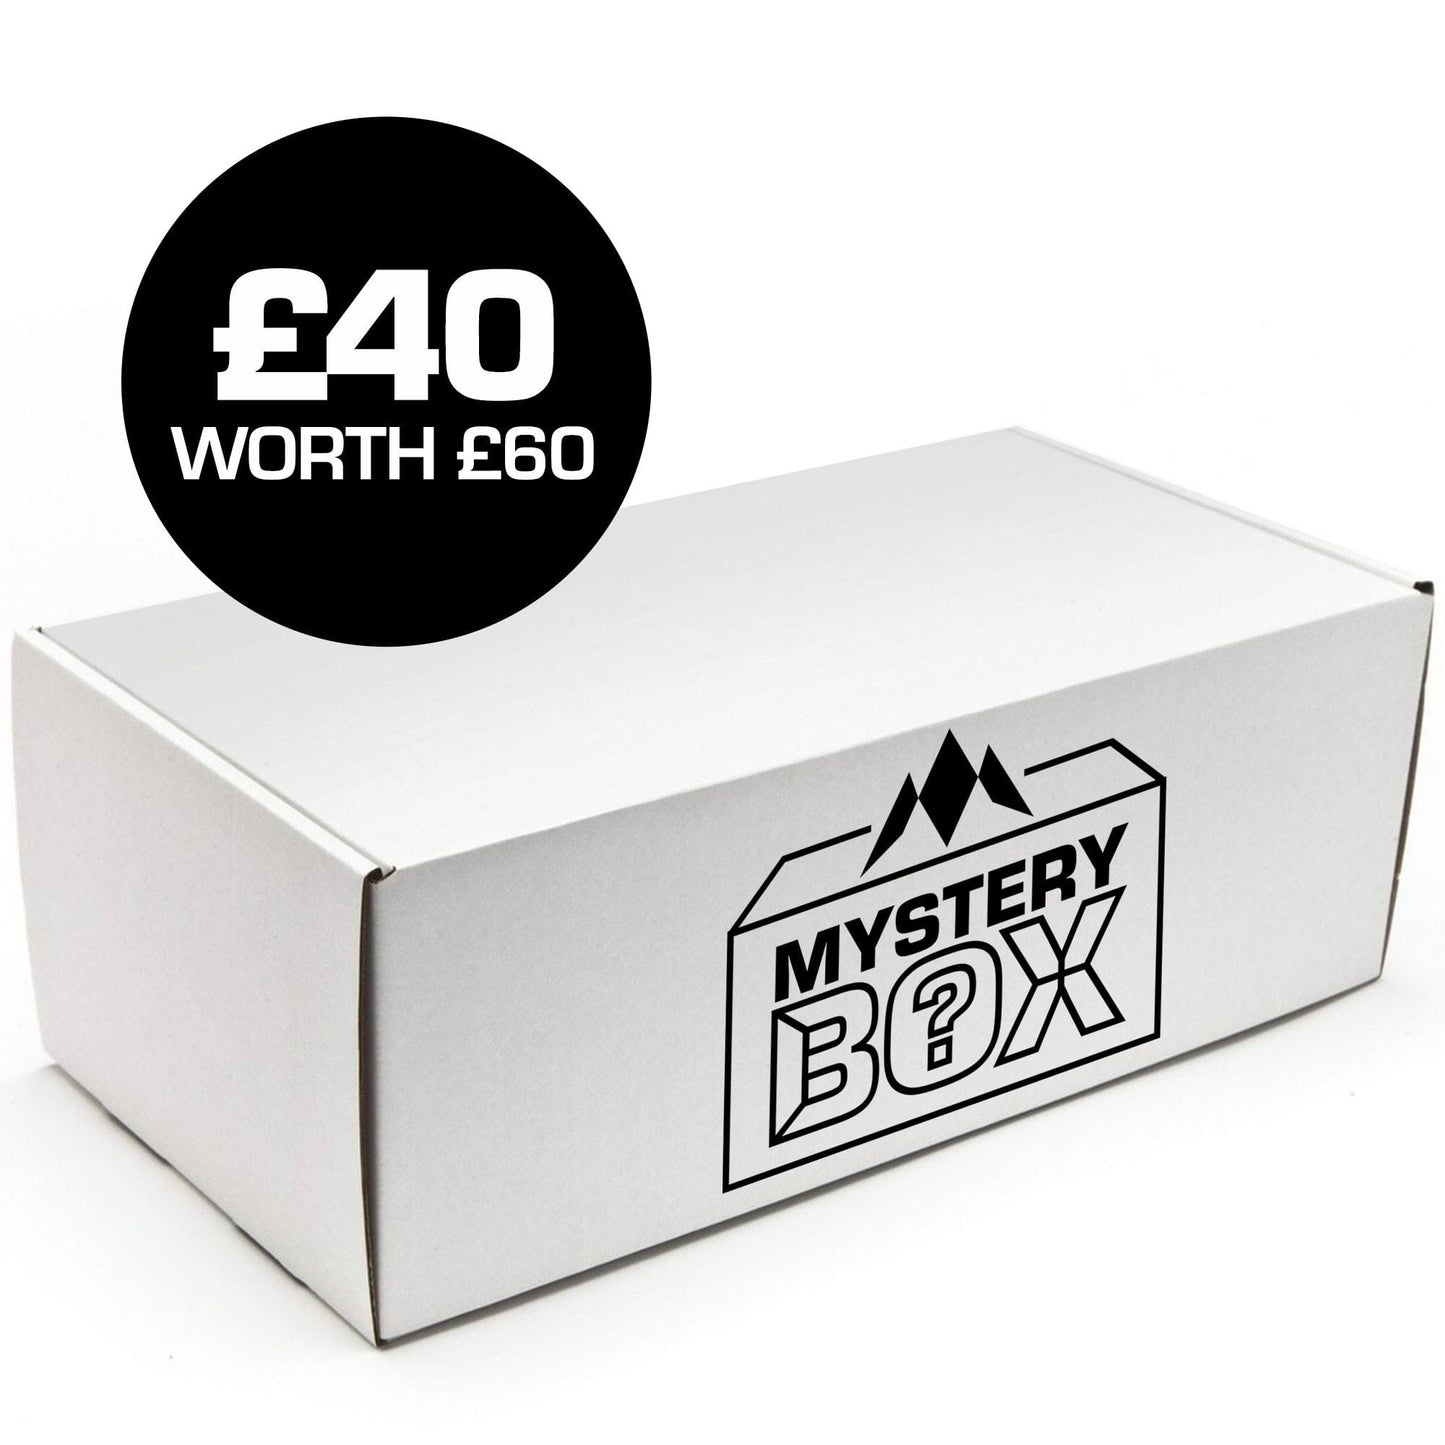 Mission Mystery Box - Soft Tip Darts & Accessories - Worth £60